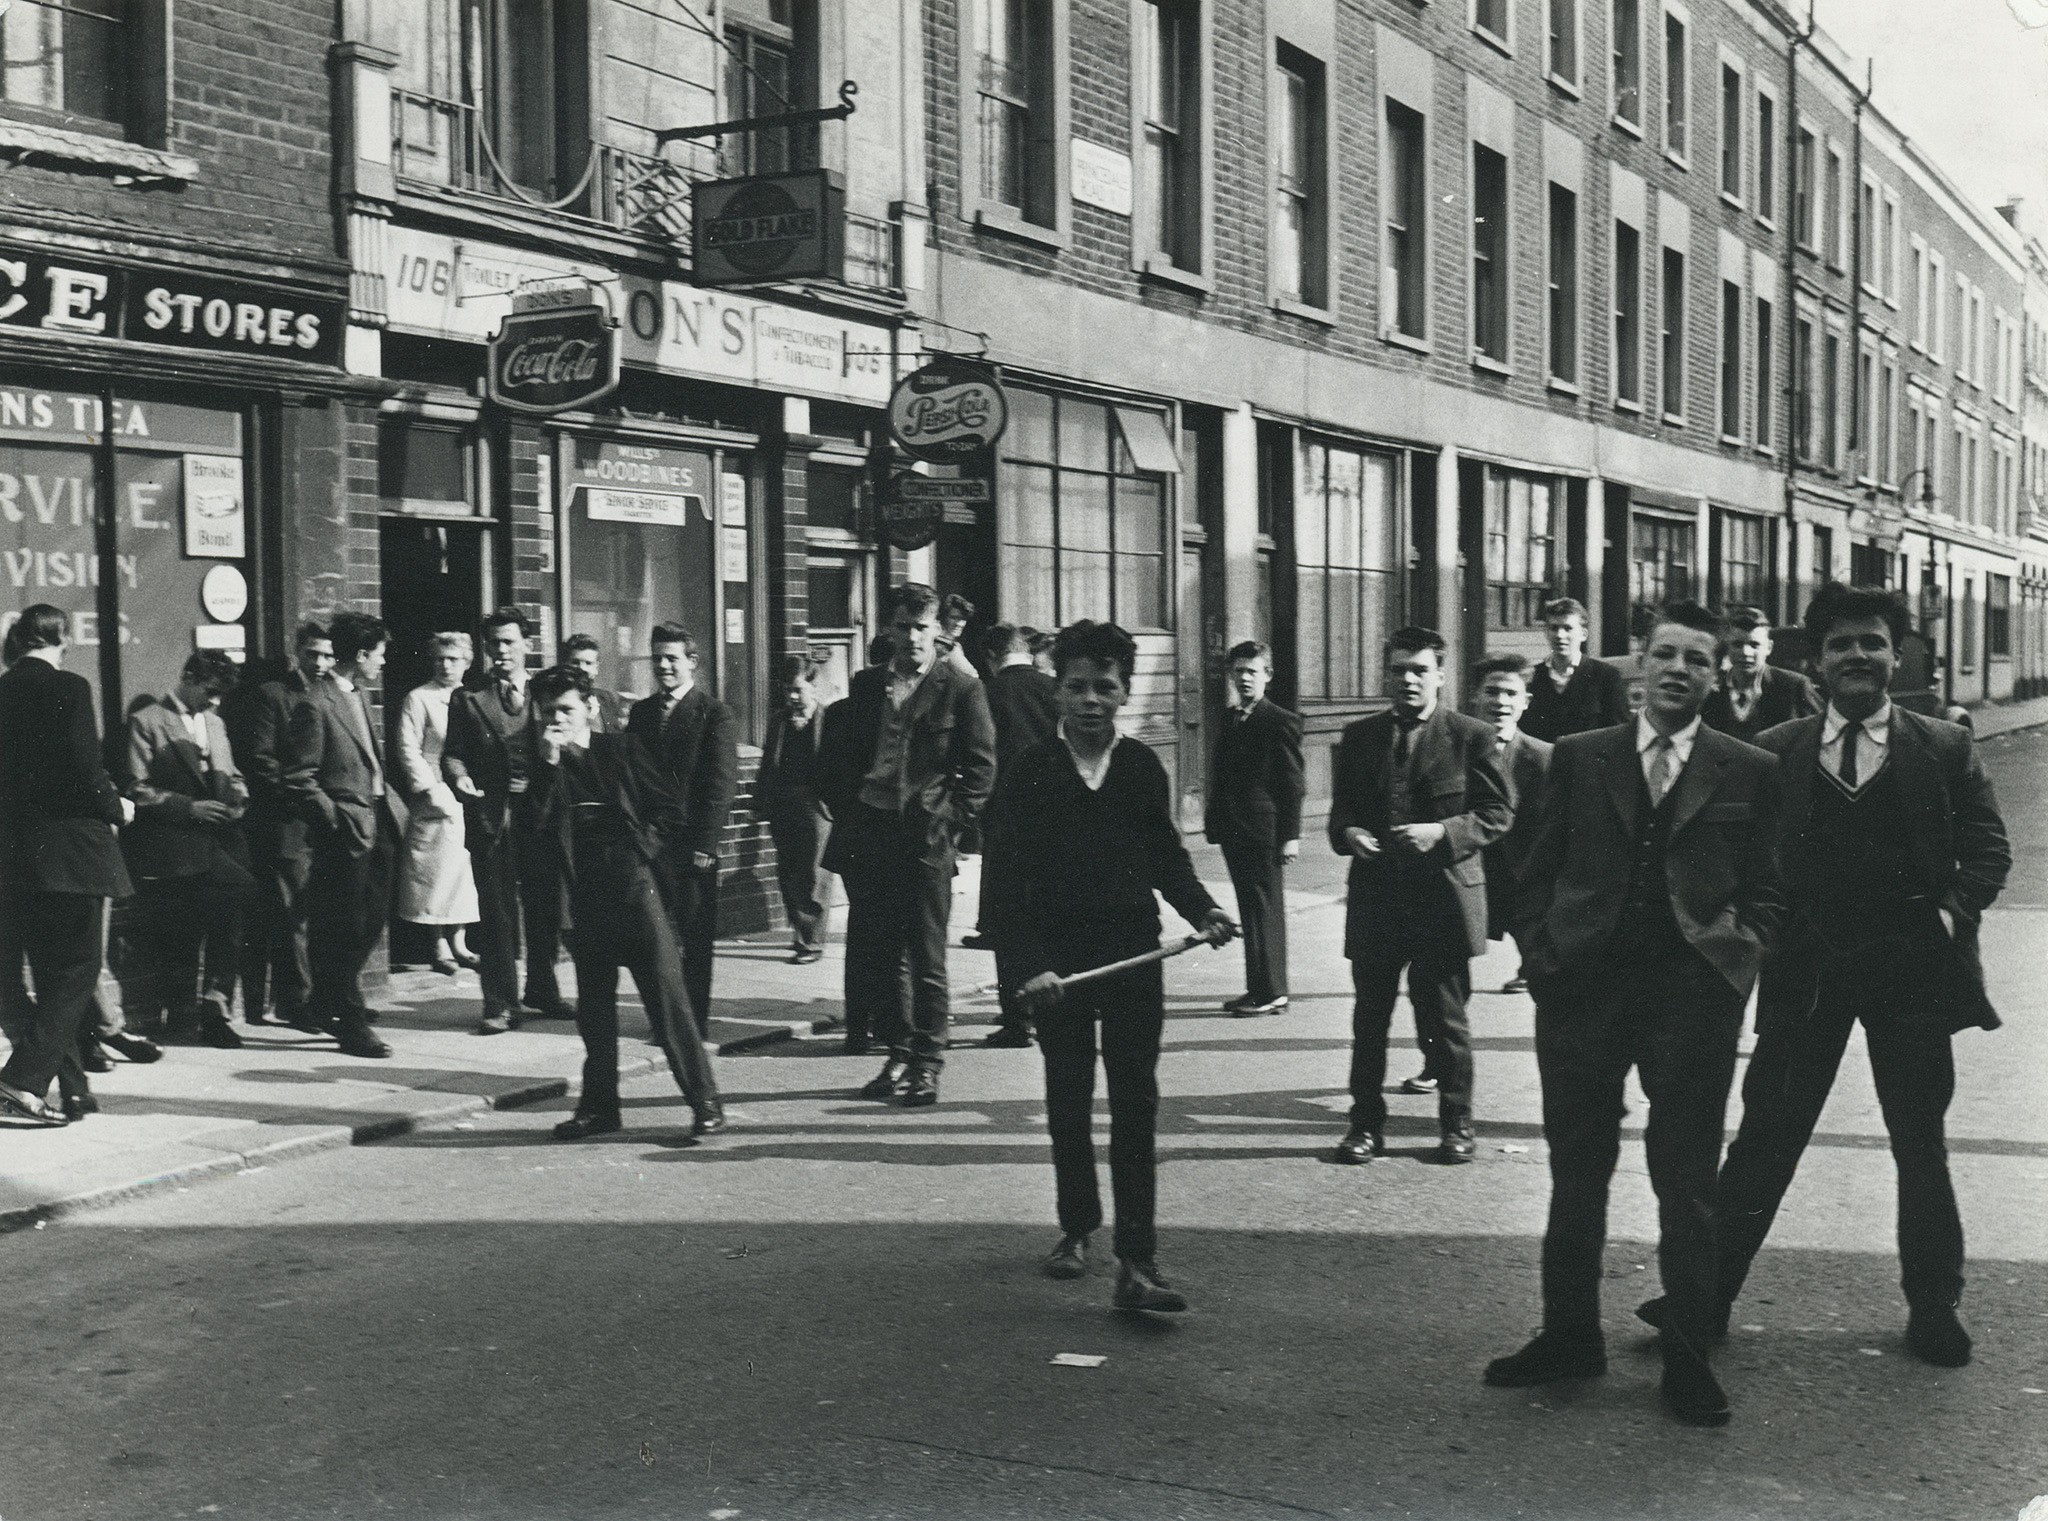 Группа Тедди-боев, Лондон, 1956. Фотограф Роджер Мэйн